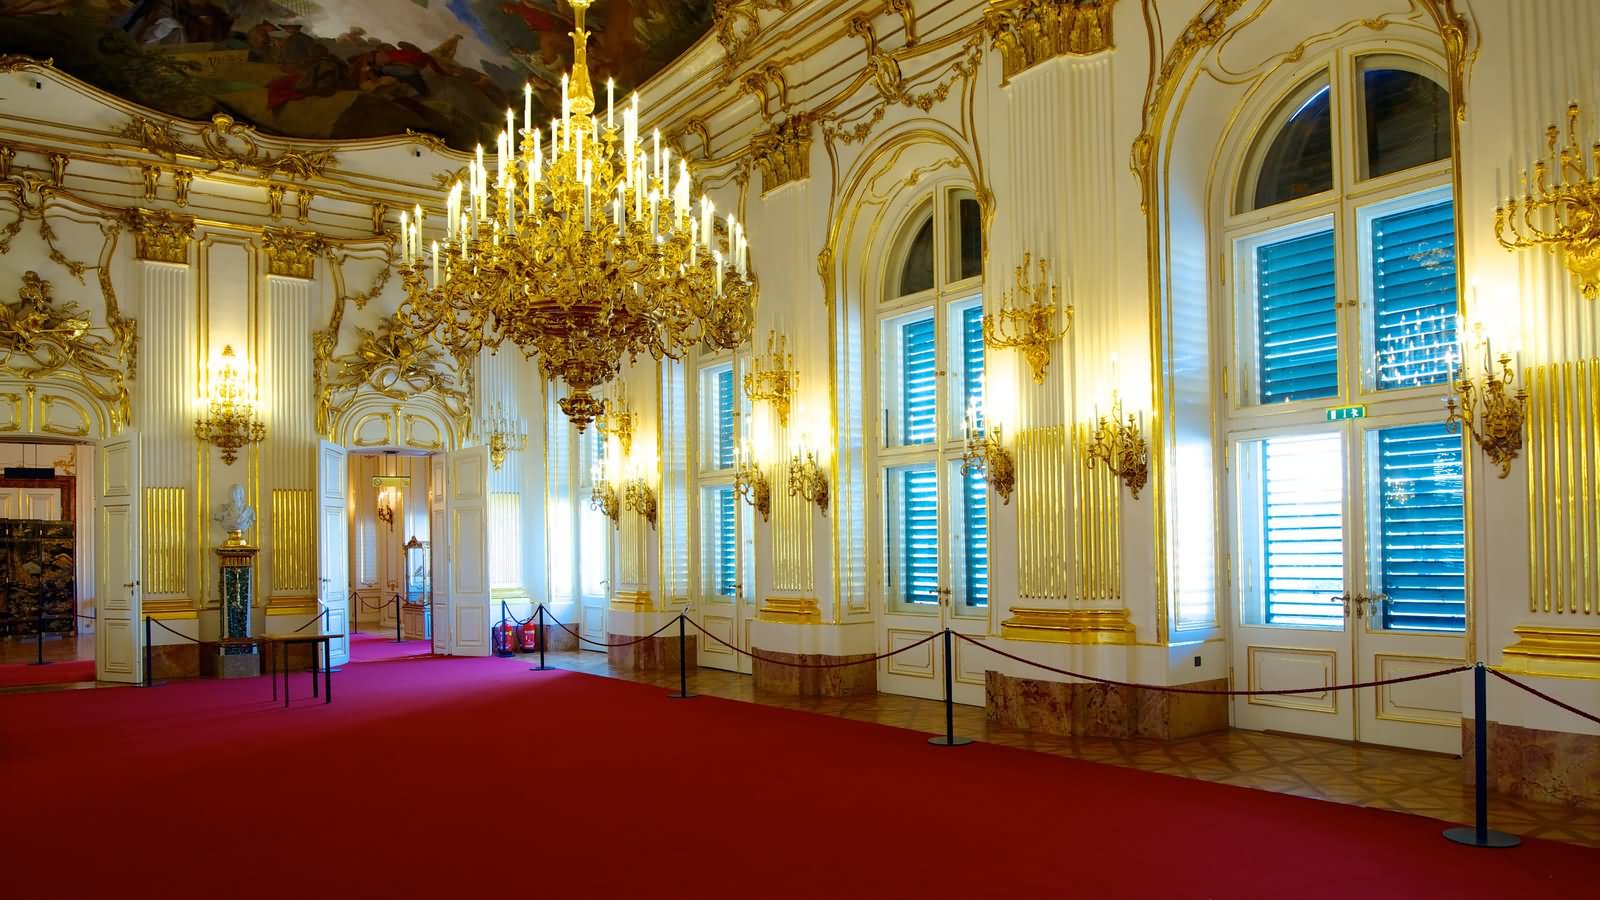 Interior View Of The Schonbrunn Palace In Vienna, Austria